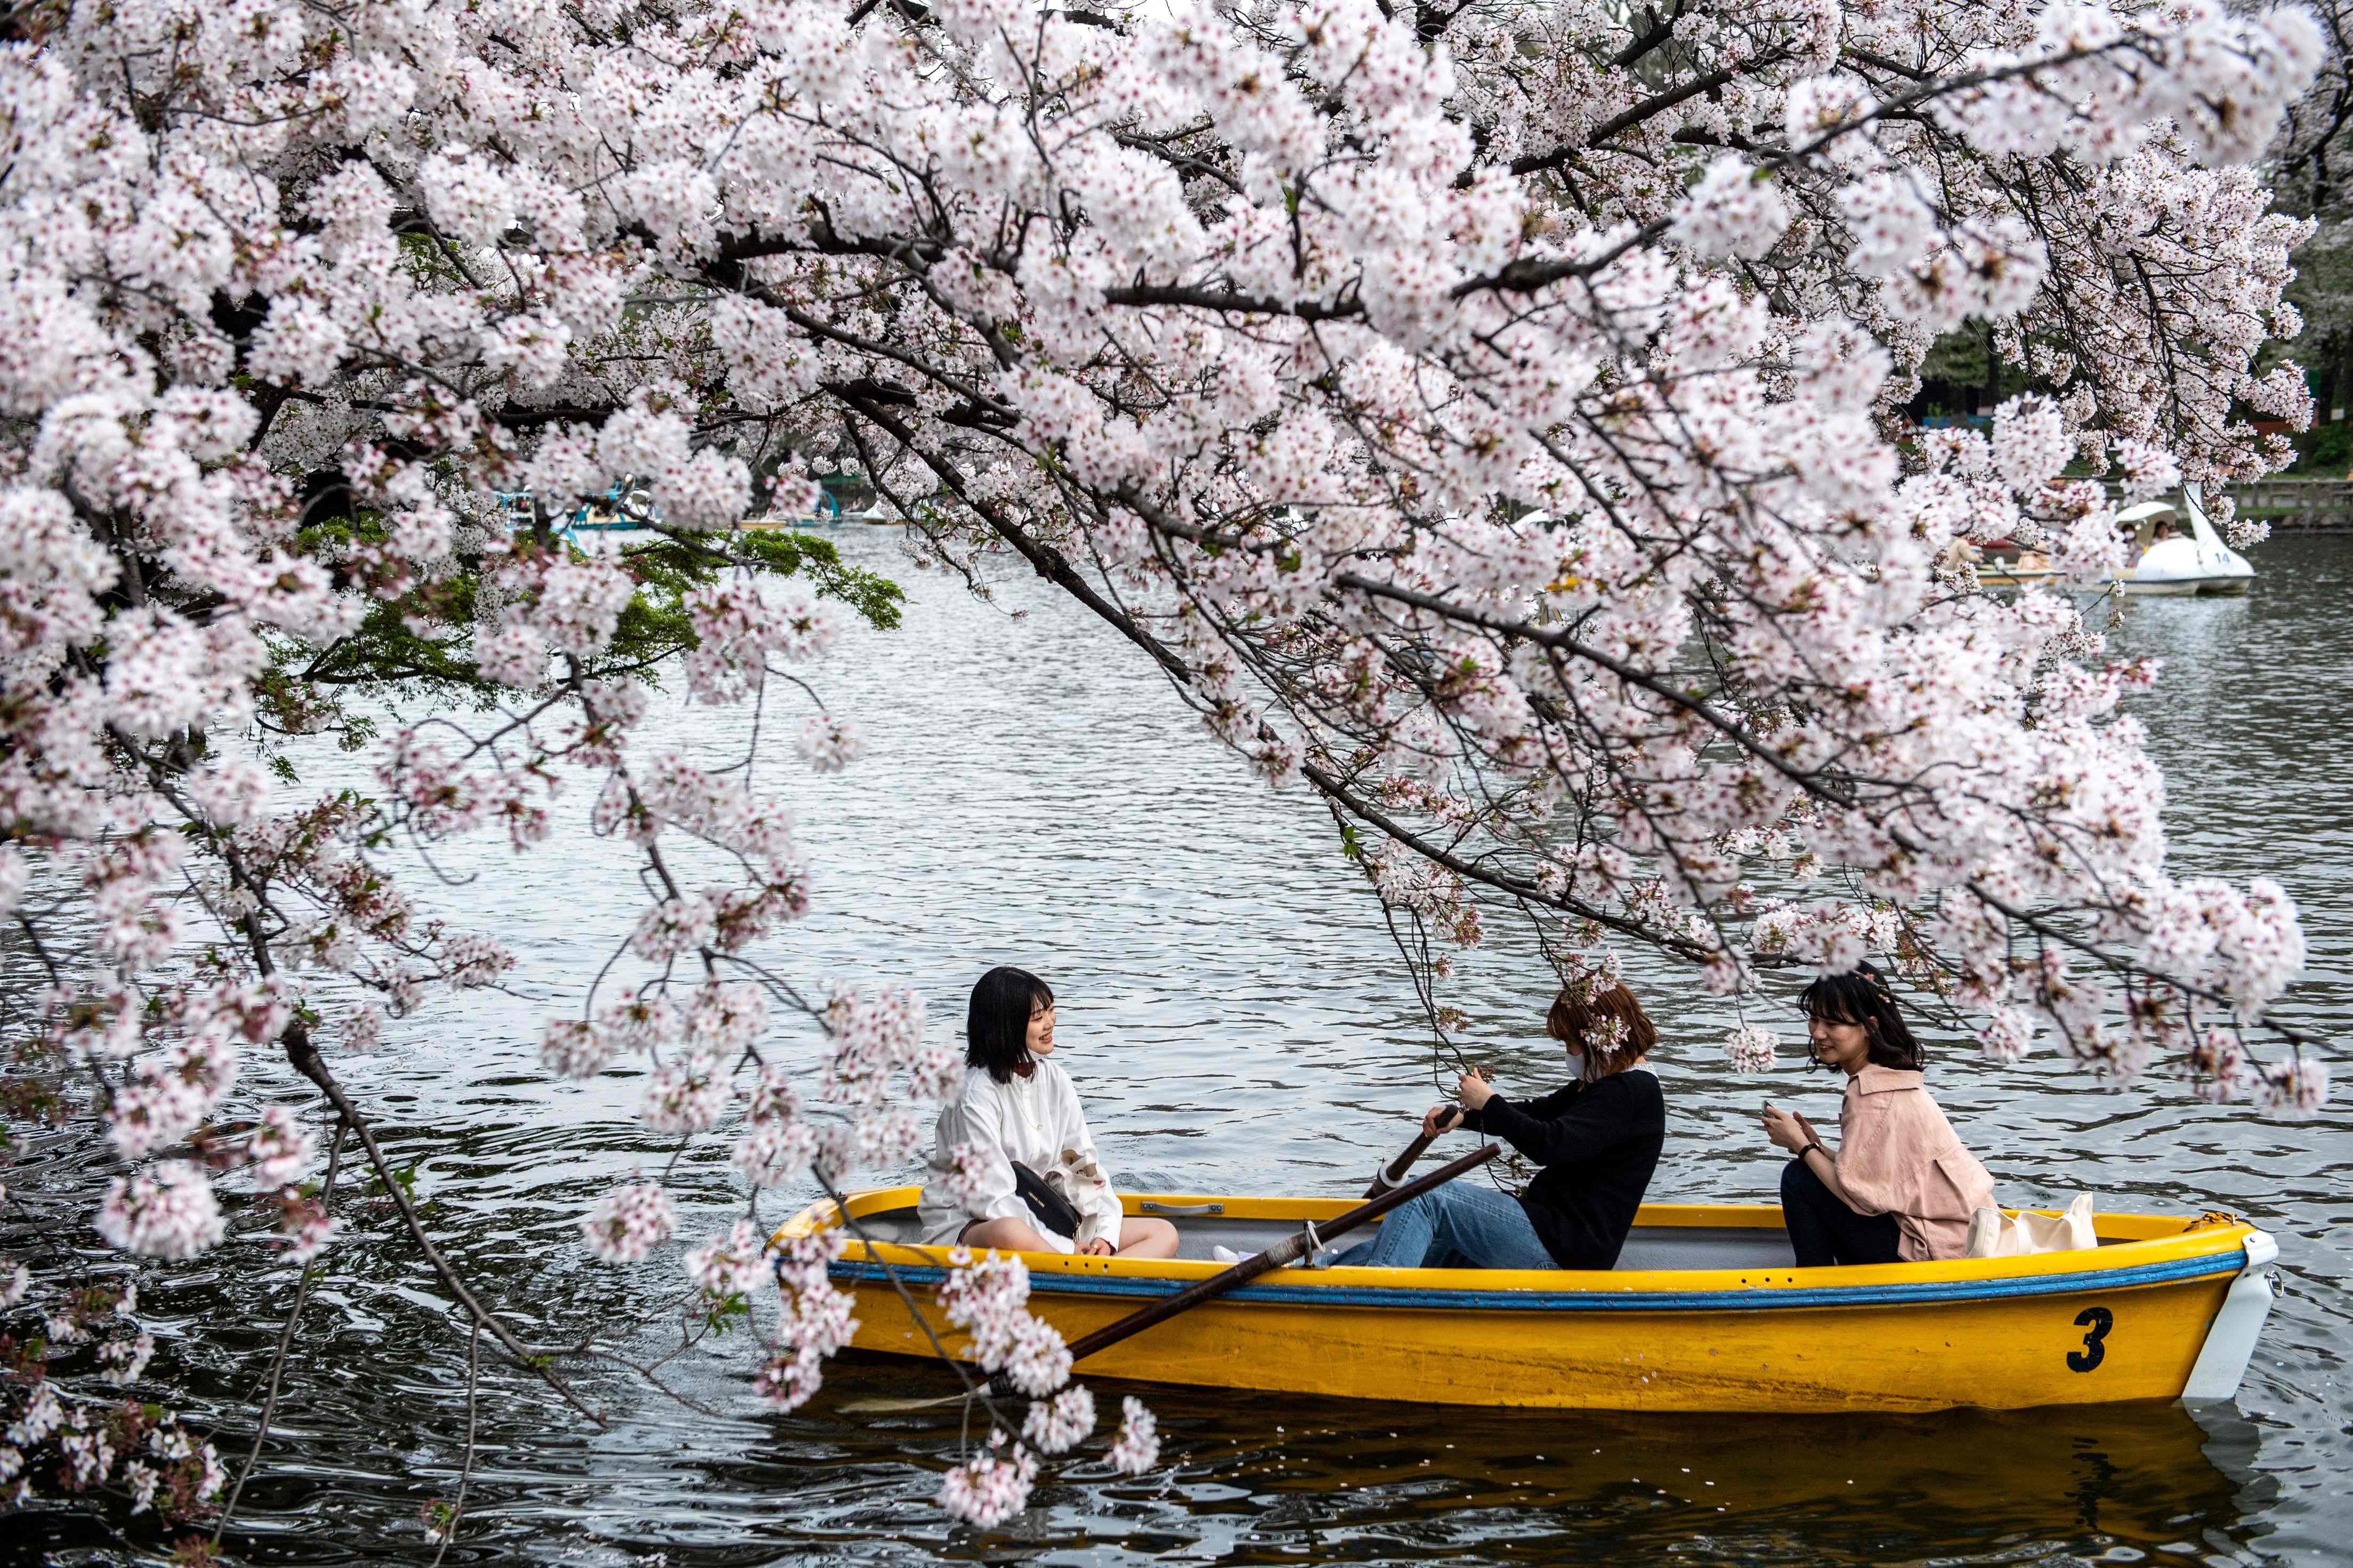 People ride a boat looking at cherry blossoms at Inokashira Park in Tokyo